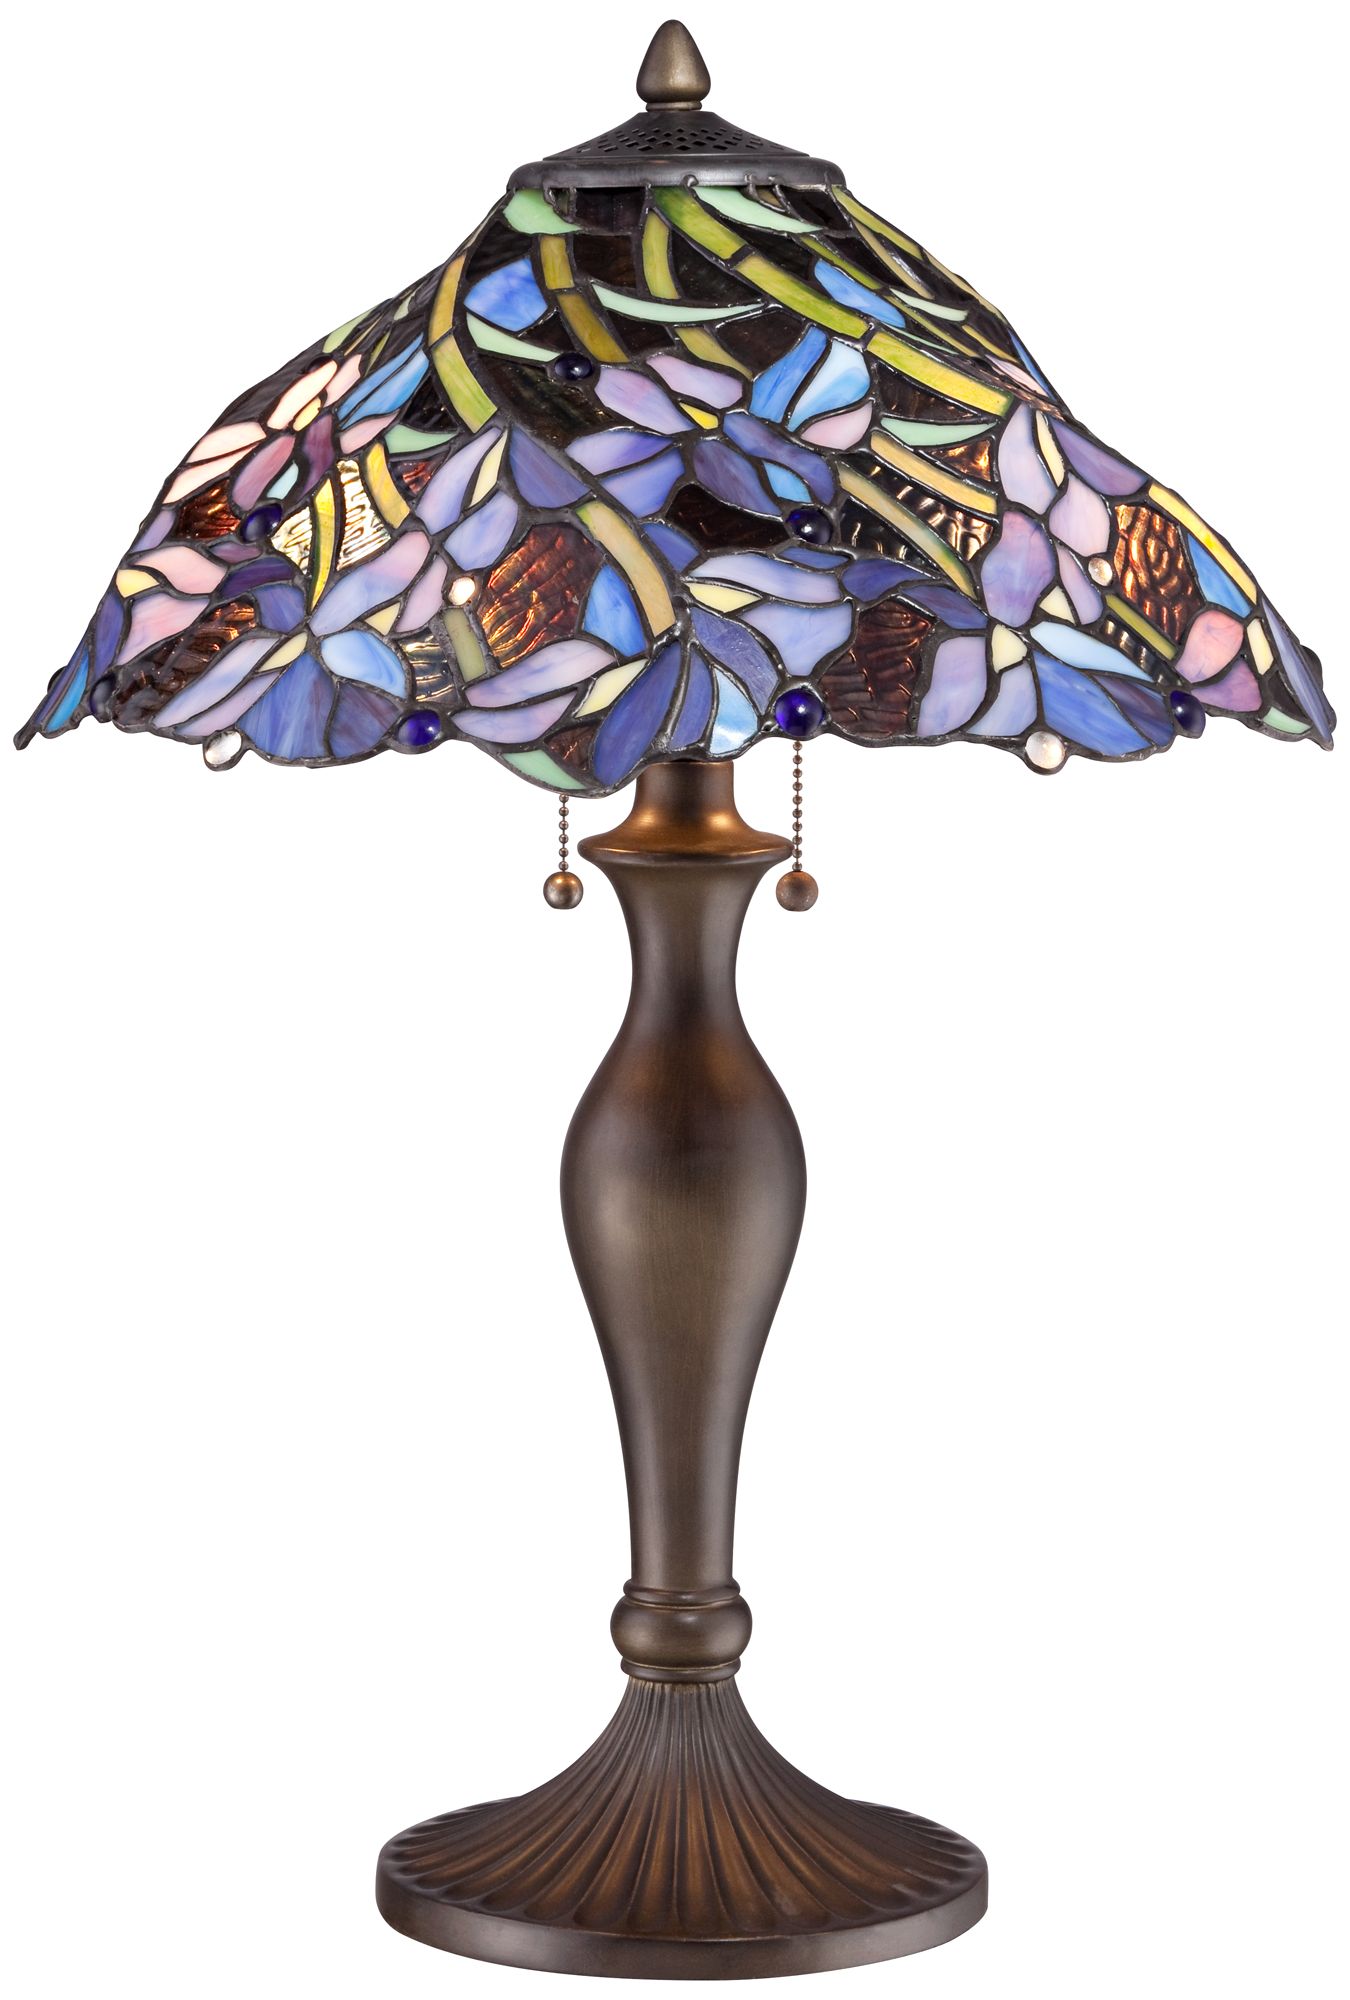 Grady Floral Swirl Tiffany-Style Table Lamp